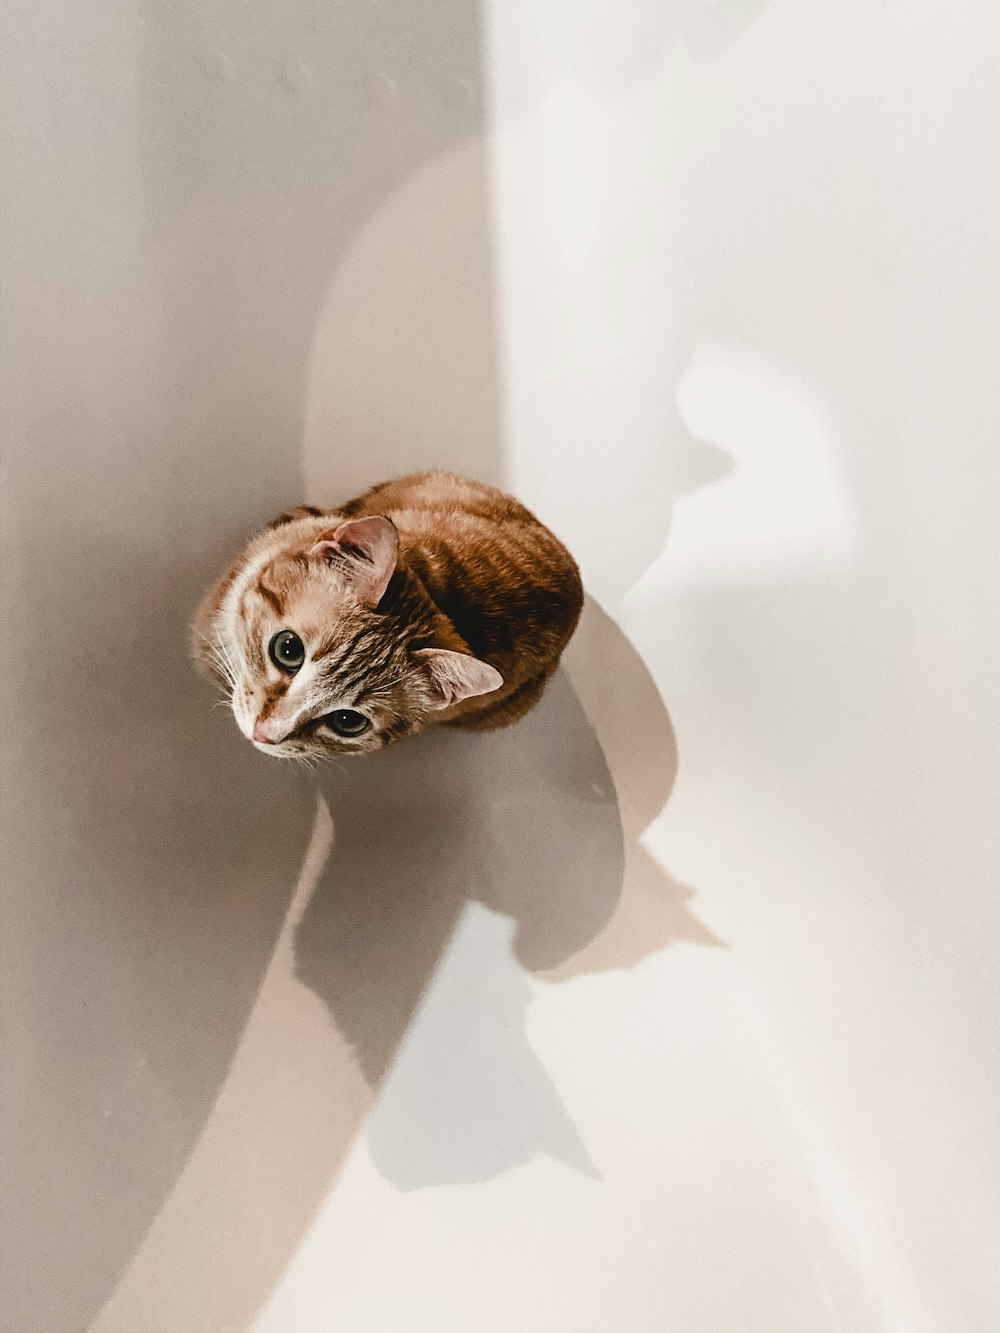 brown tabby cat on white ceramic sink